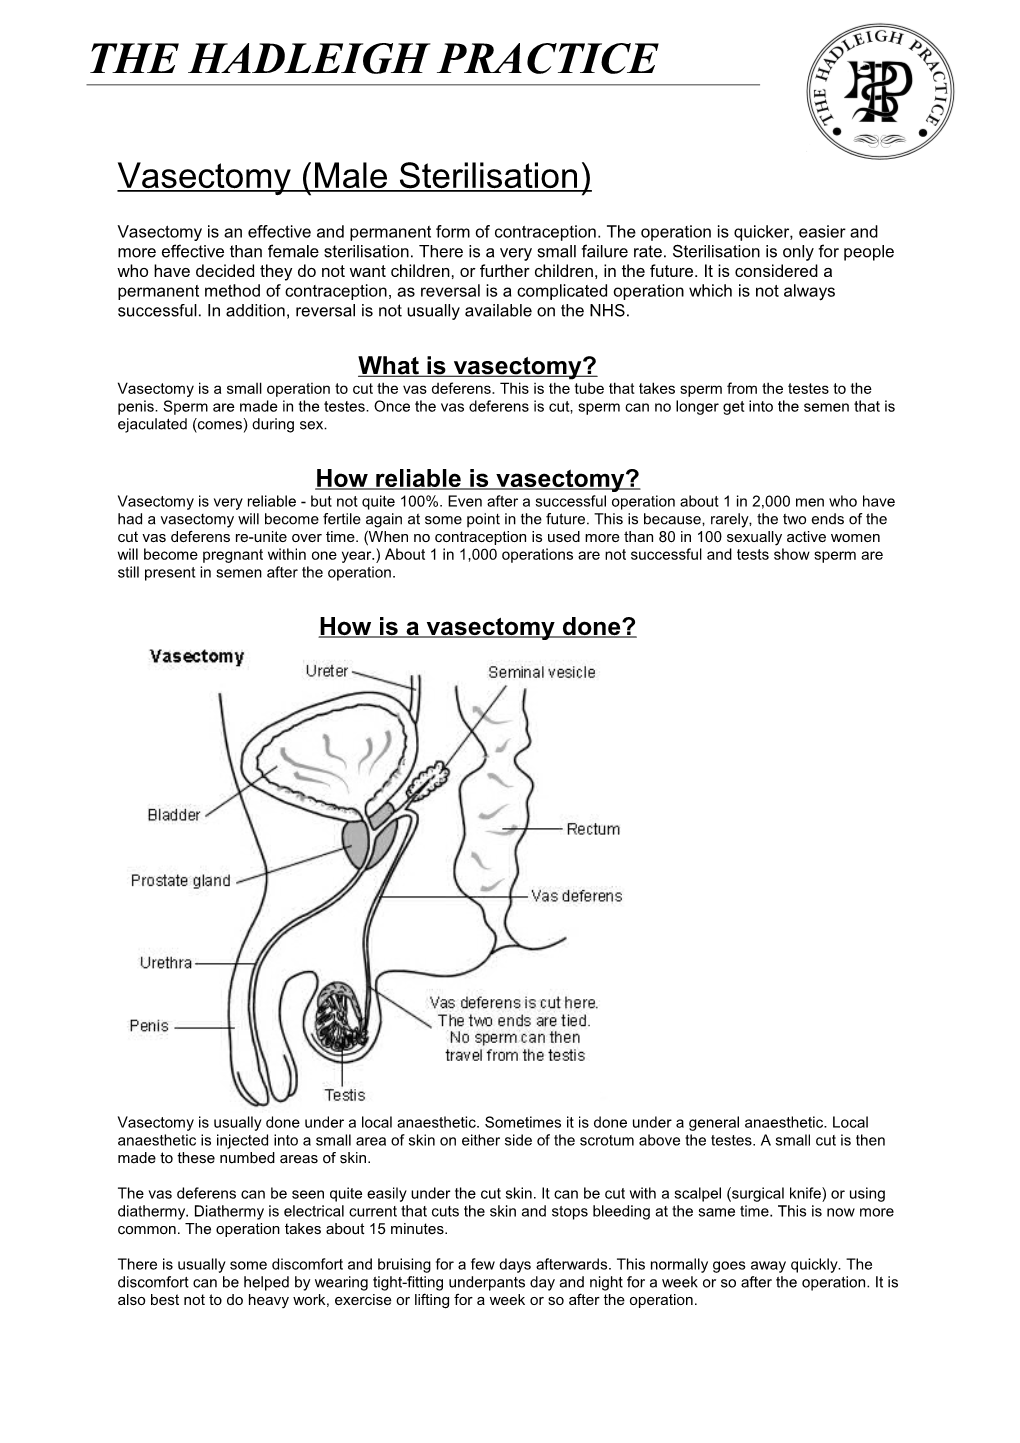 Vasectomy (Male Sterilisation)